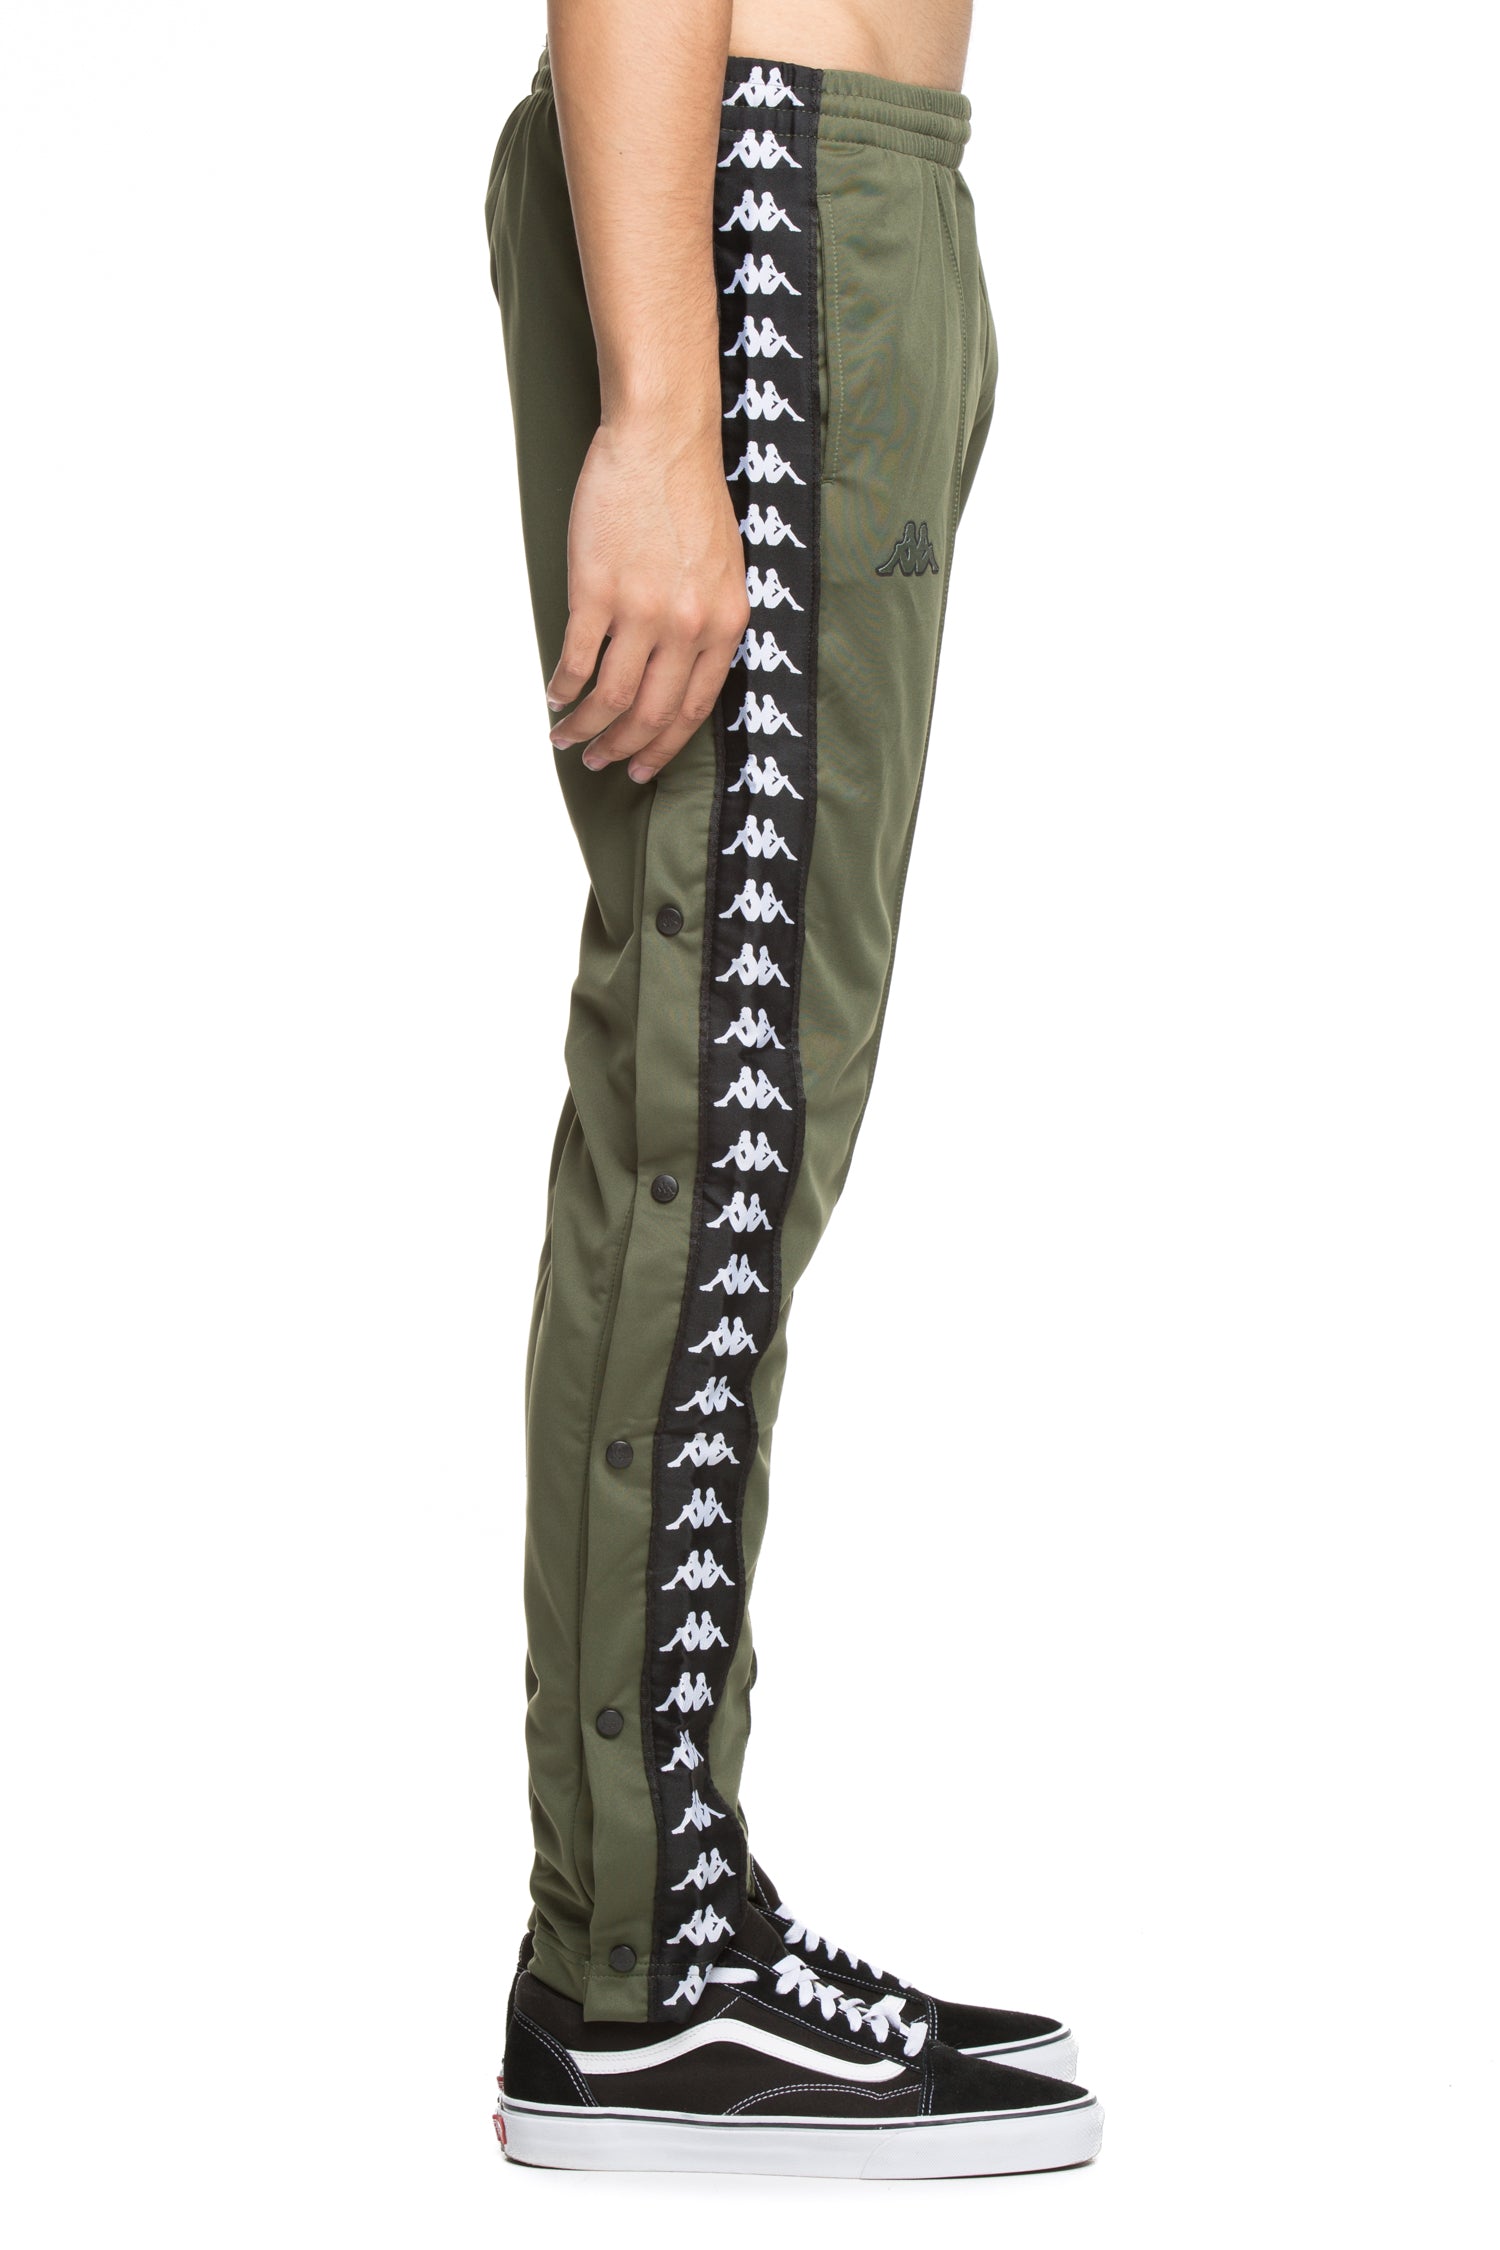 kappa camouflage pants